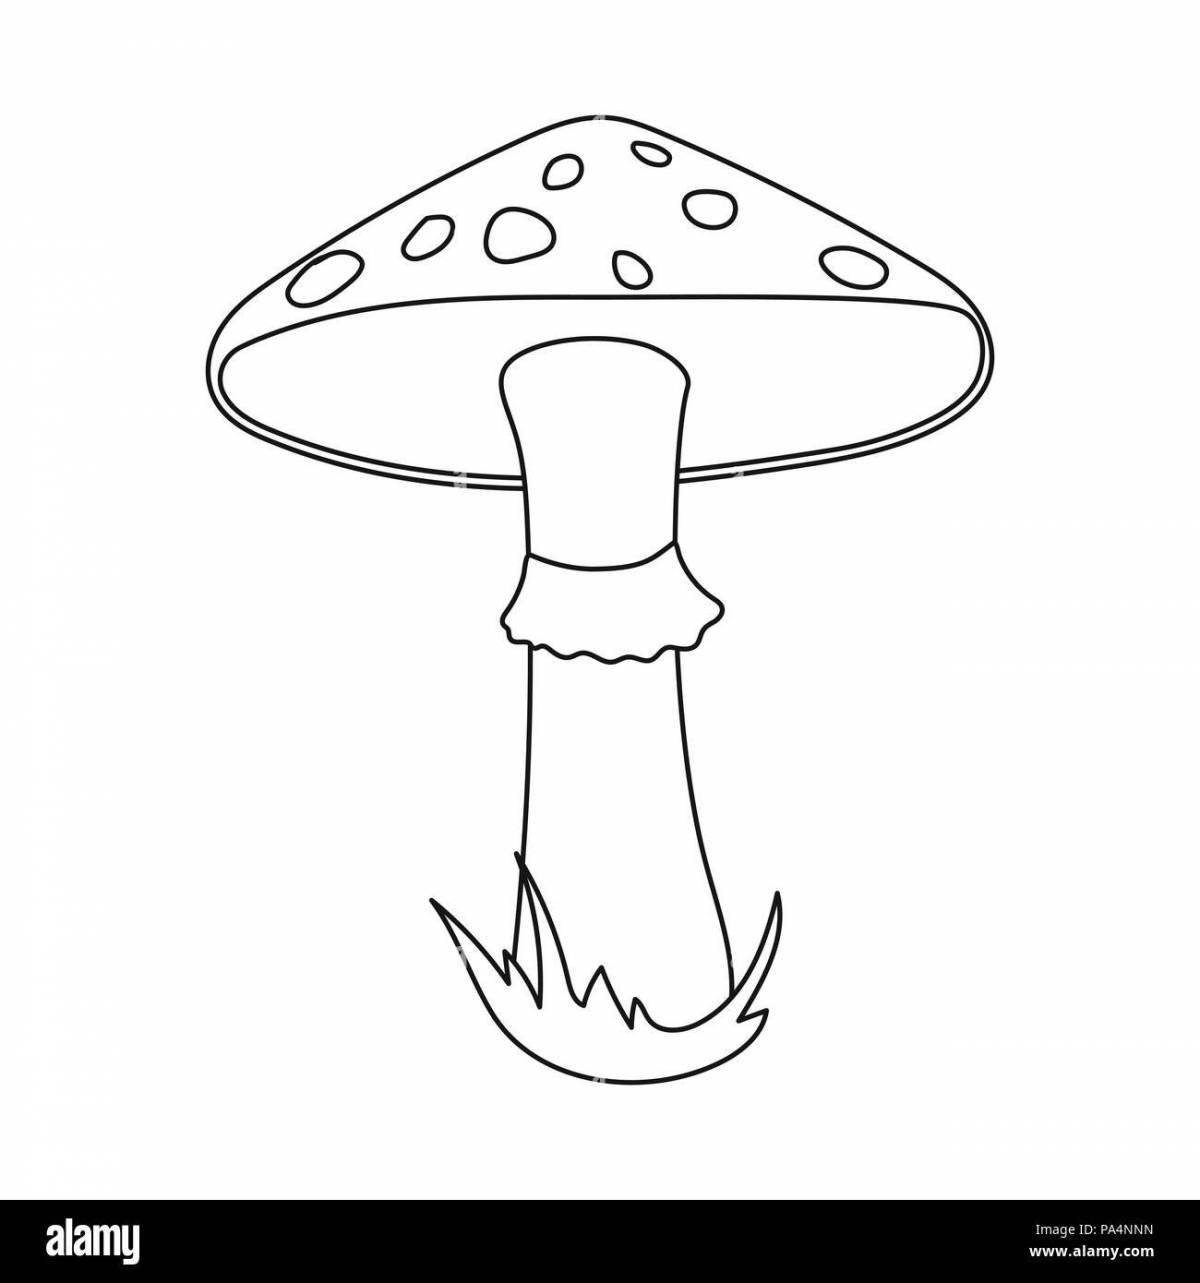 Playful drawing of mushroom fly agaric